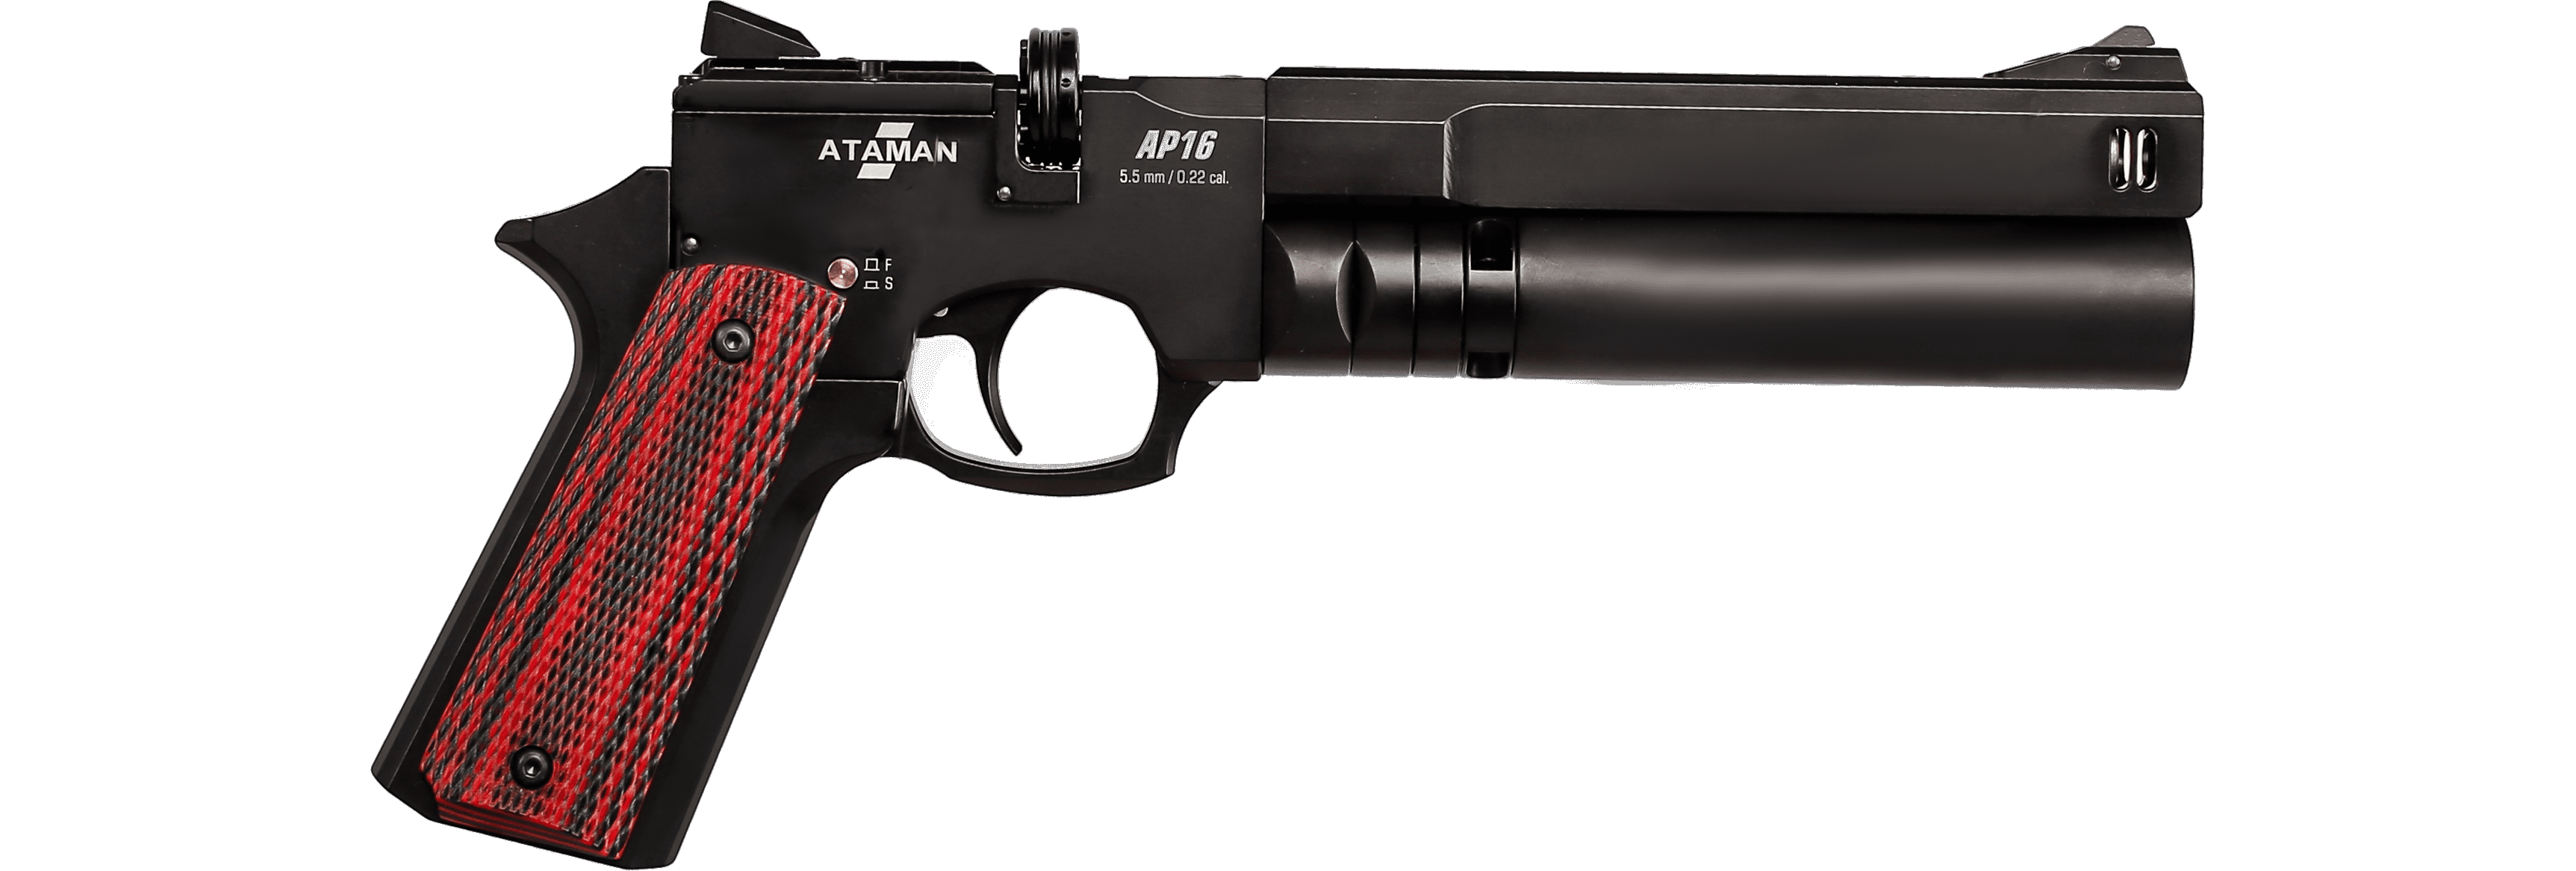 Пневматический PCP пистолет ATAMAN AP16 Silver Compact (рукоятка Metal), кал. 5.5мм